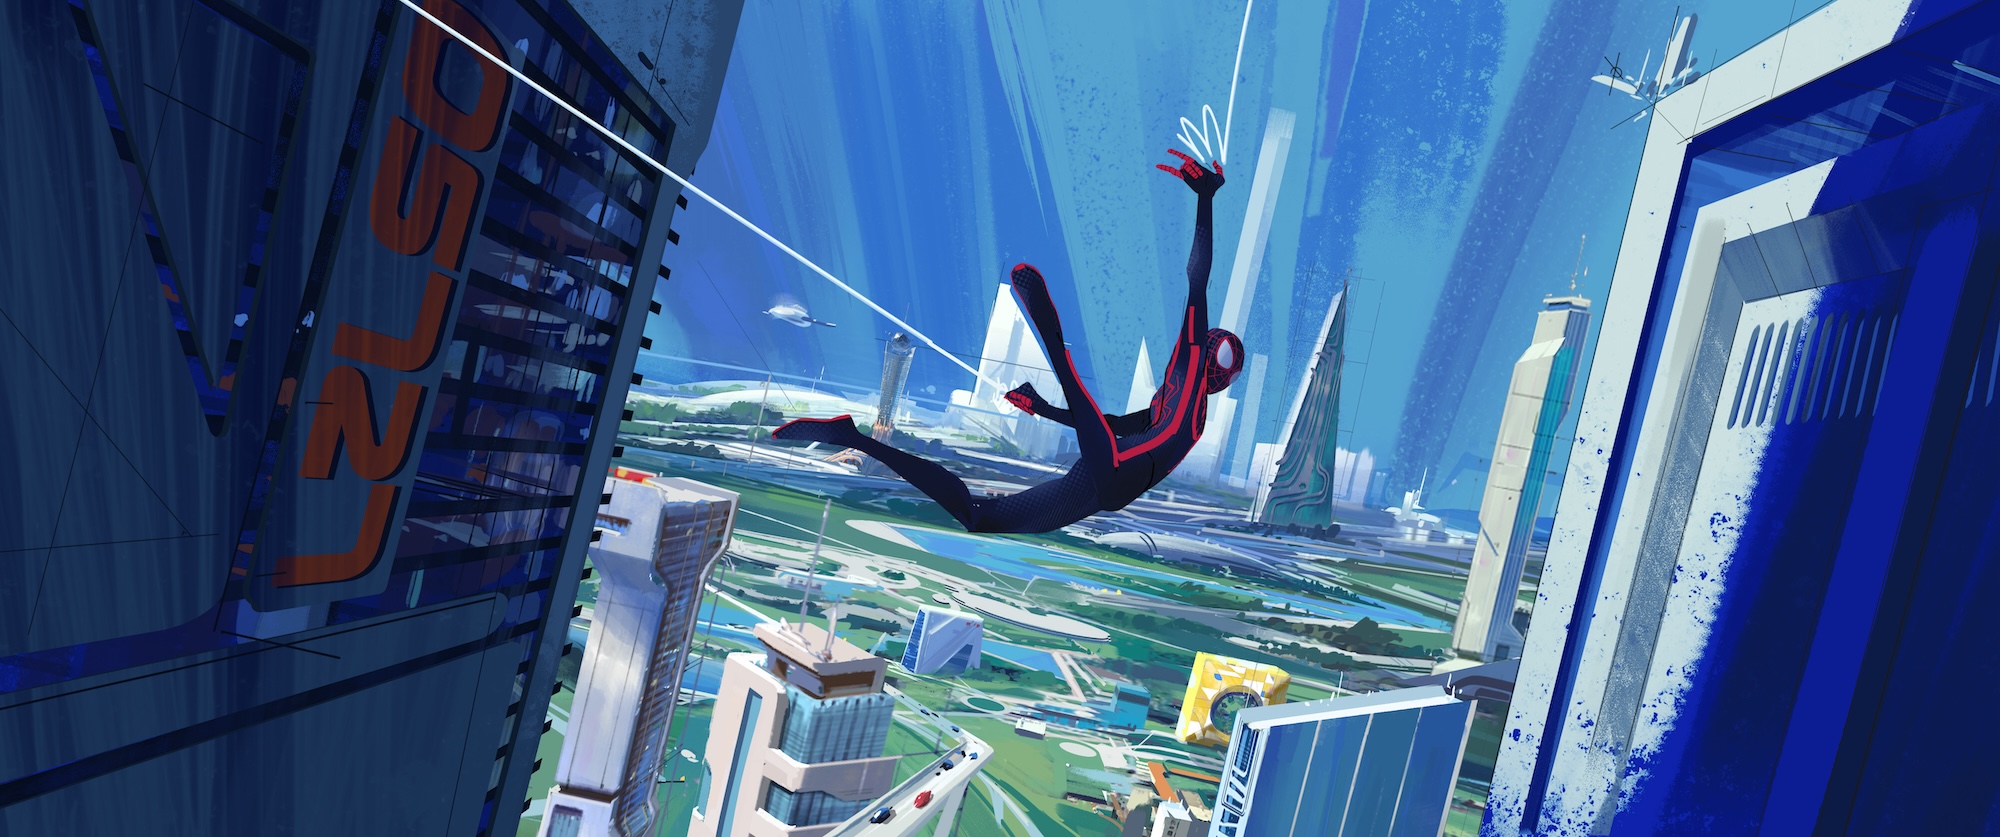 Patrick O'Keefe, Spider-Man: Beyond The Spider-Verse